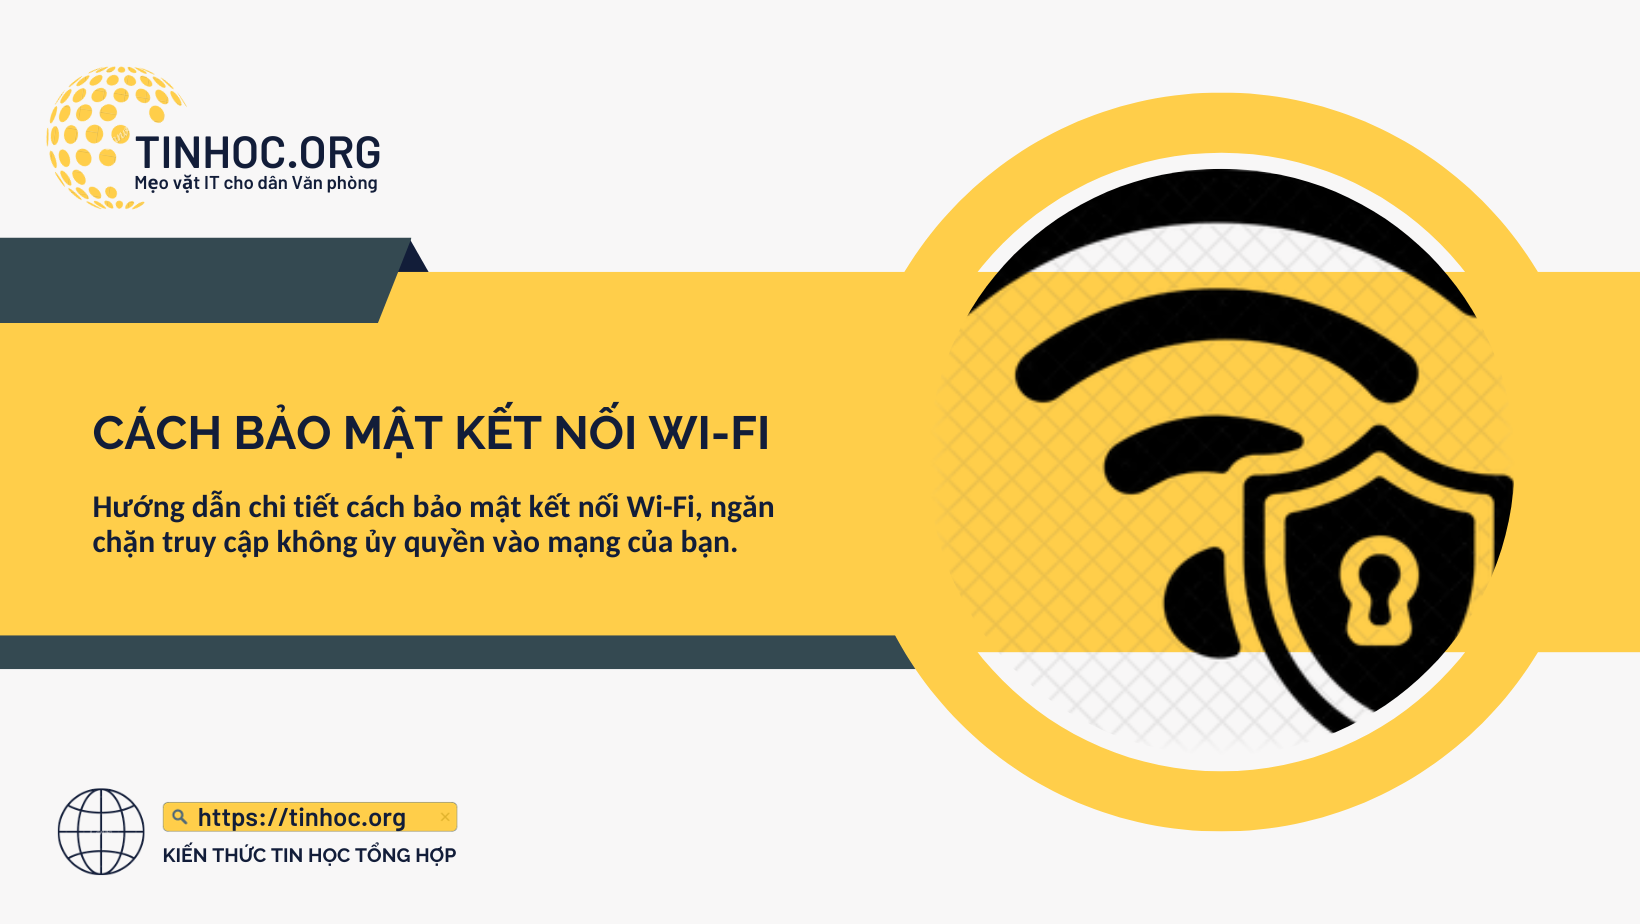 Cách bảo mật kết nối Wi-Fi